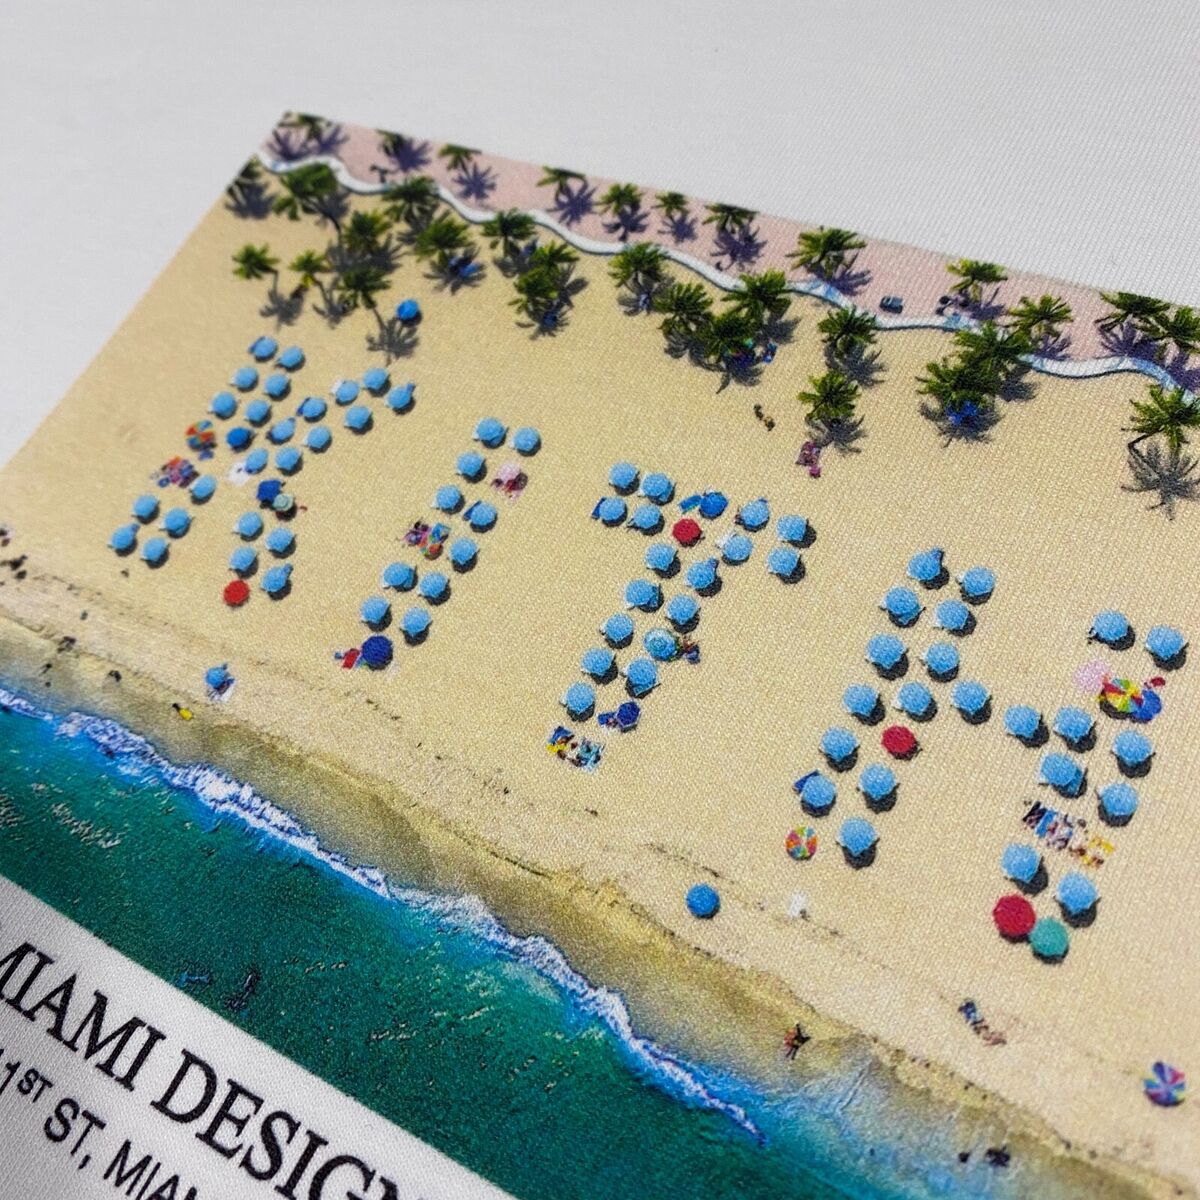 Kith Miami Design District Exclusive Beach Resort tee